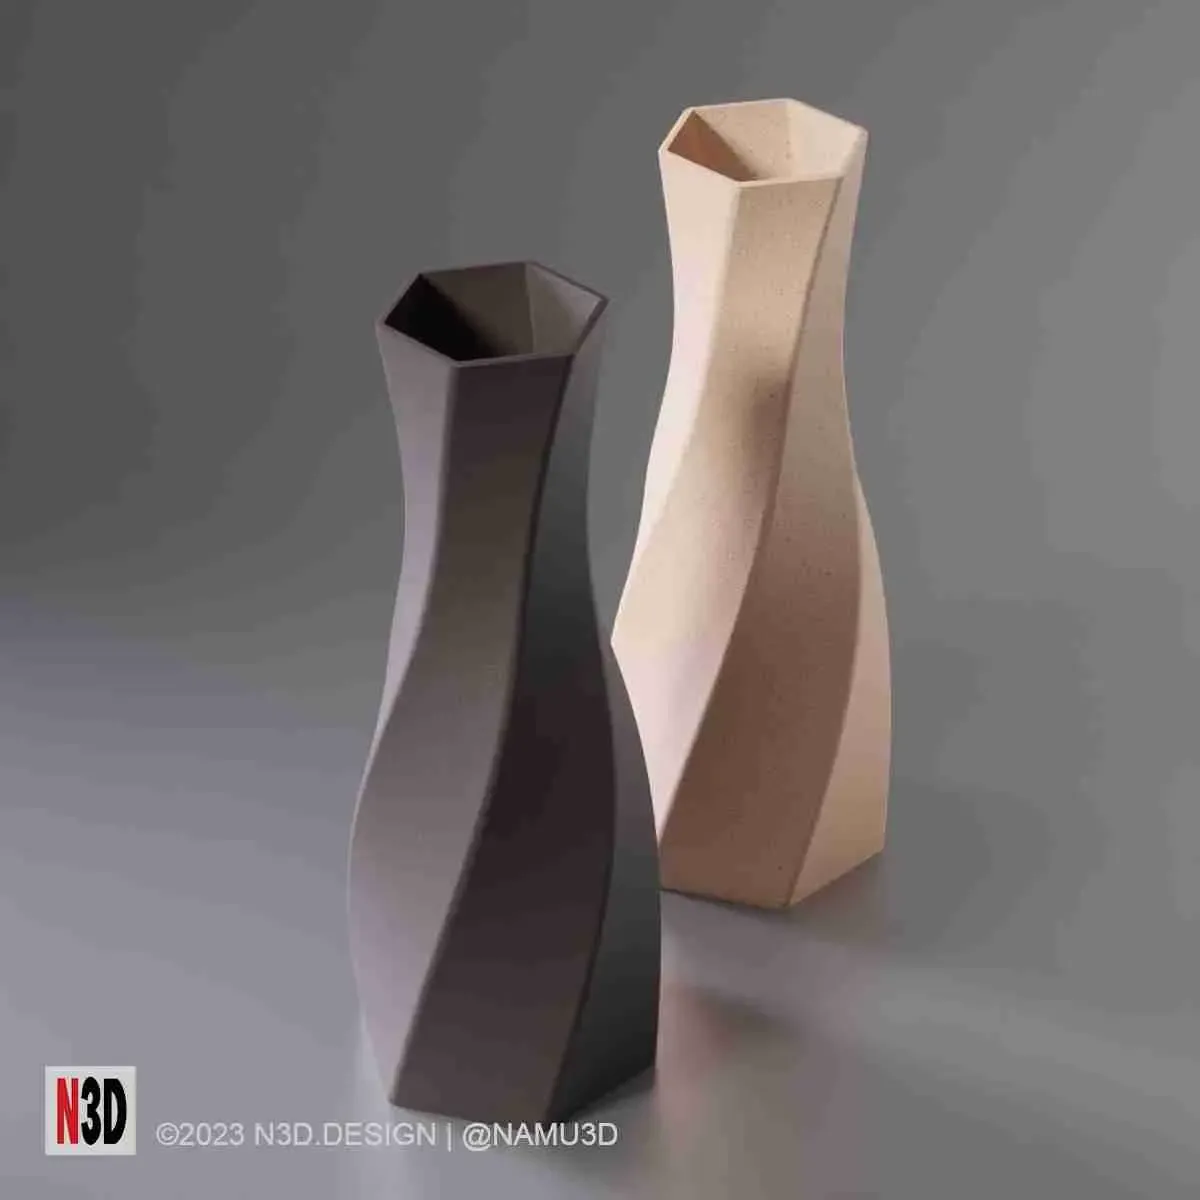 Vase 0031 - Classic twist vase